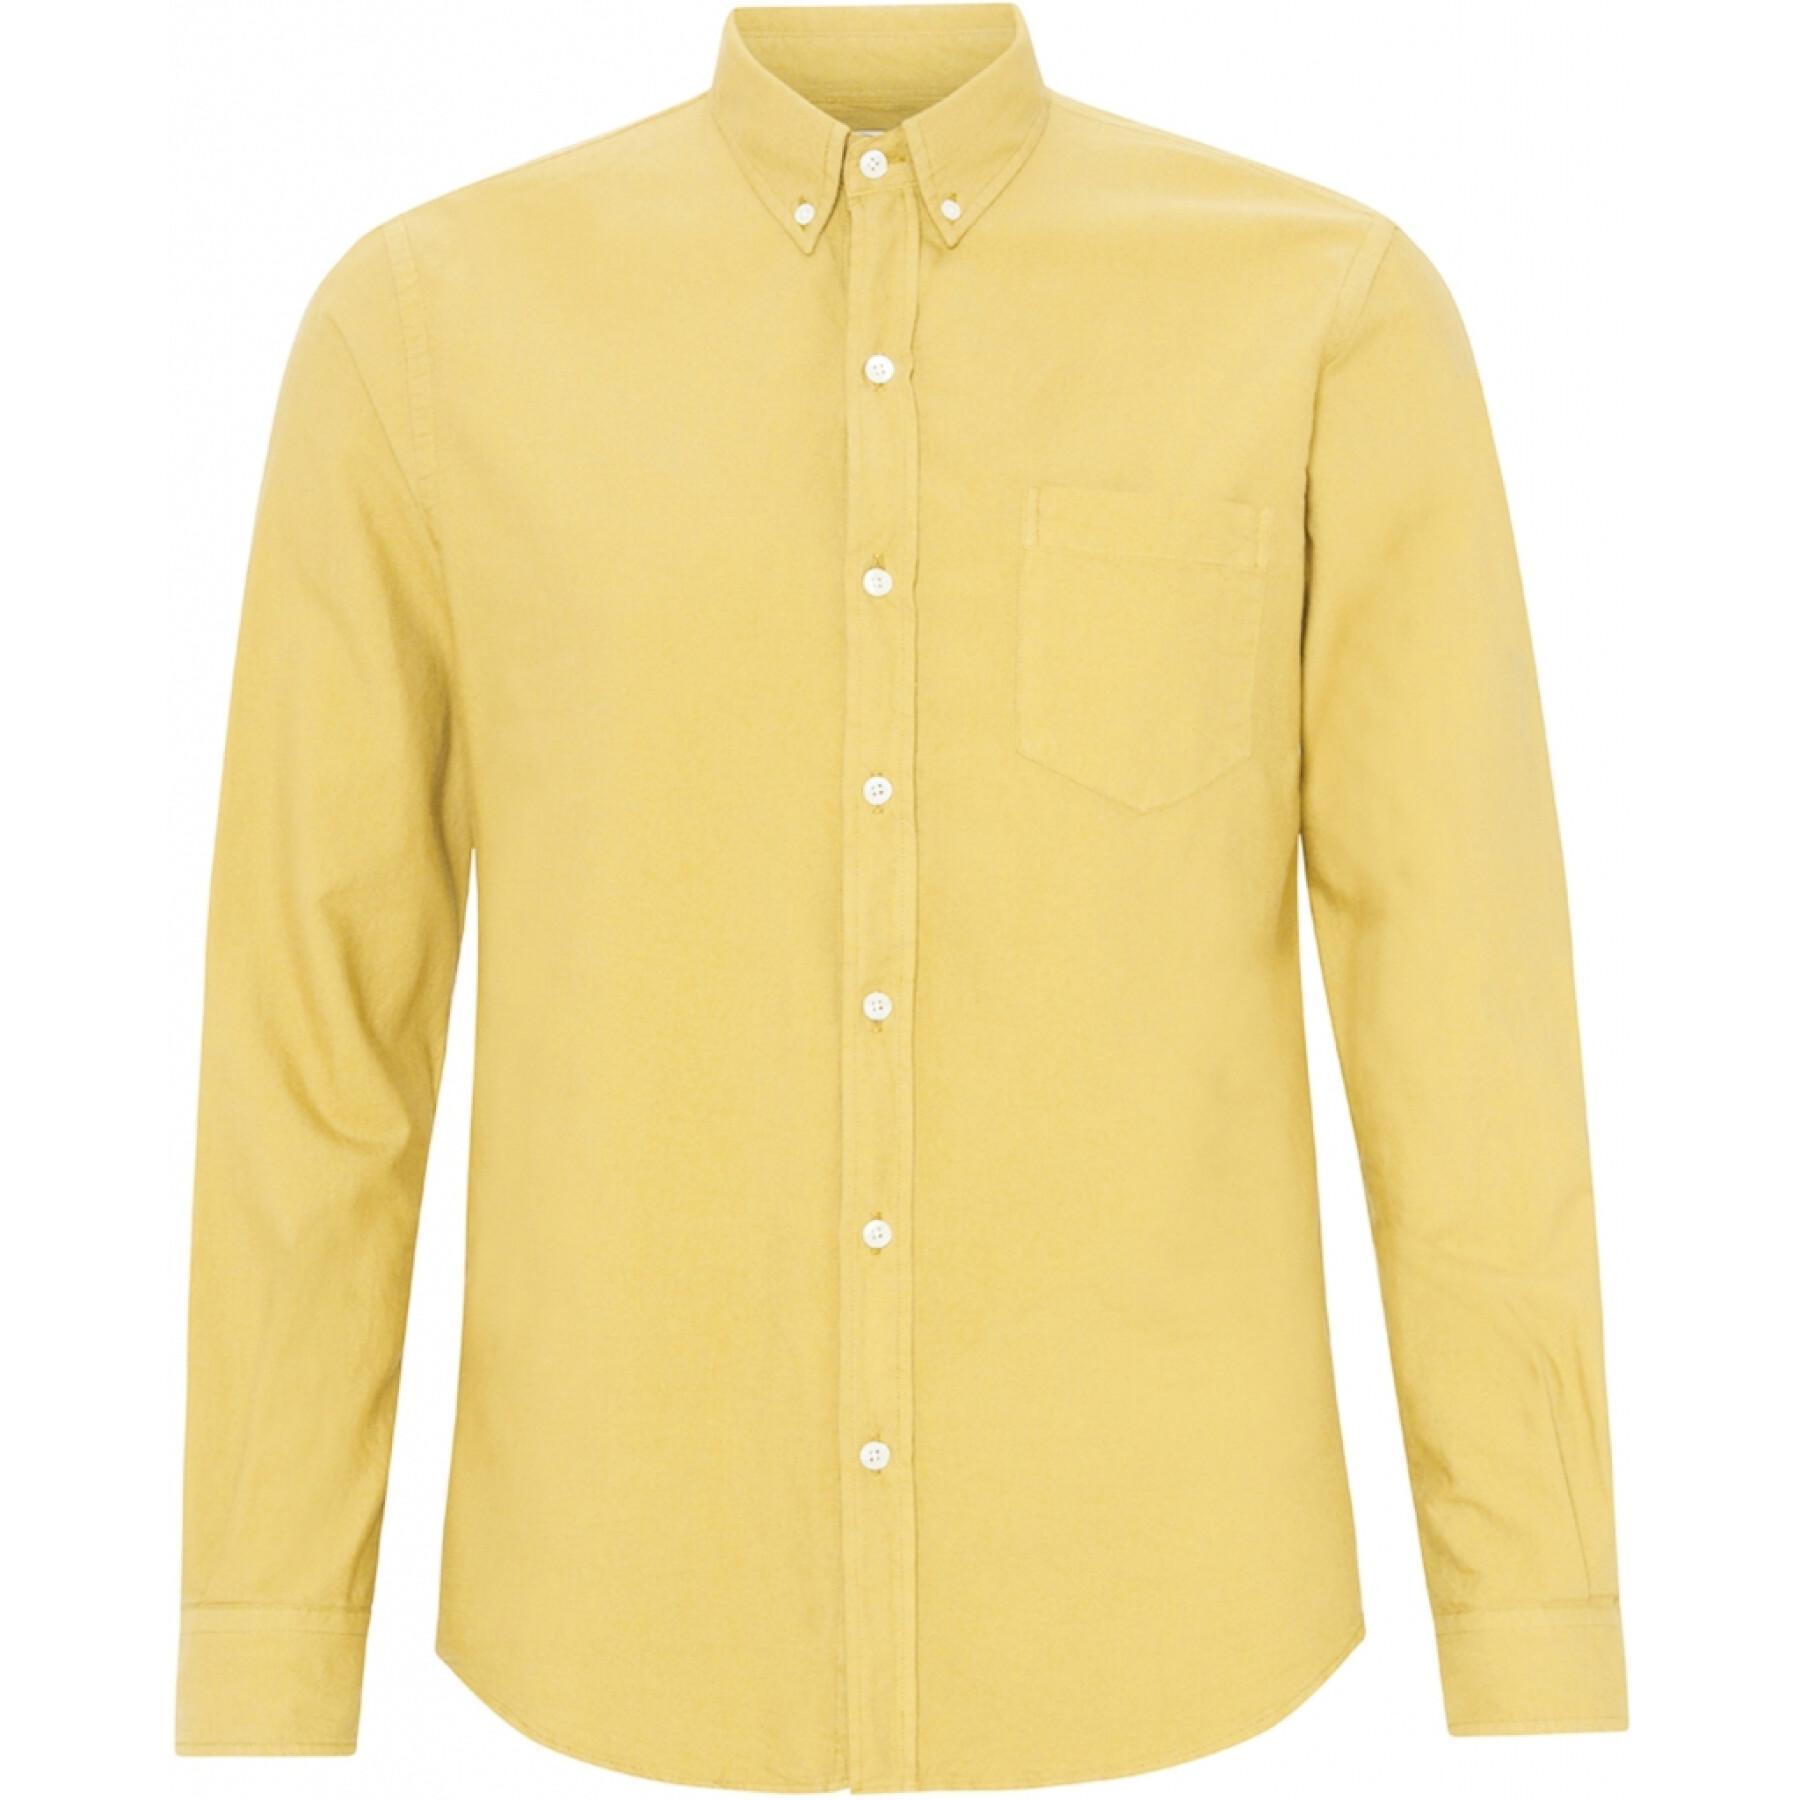 Camisa Colorful Standard Organic lemon yellow